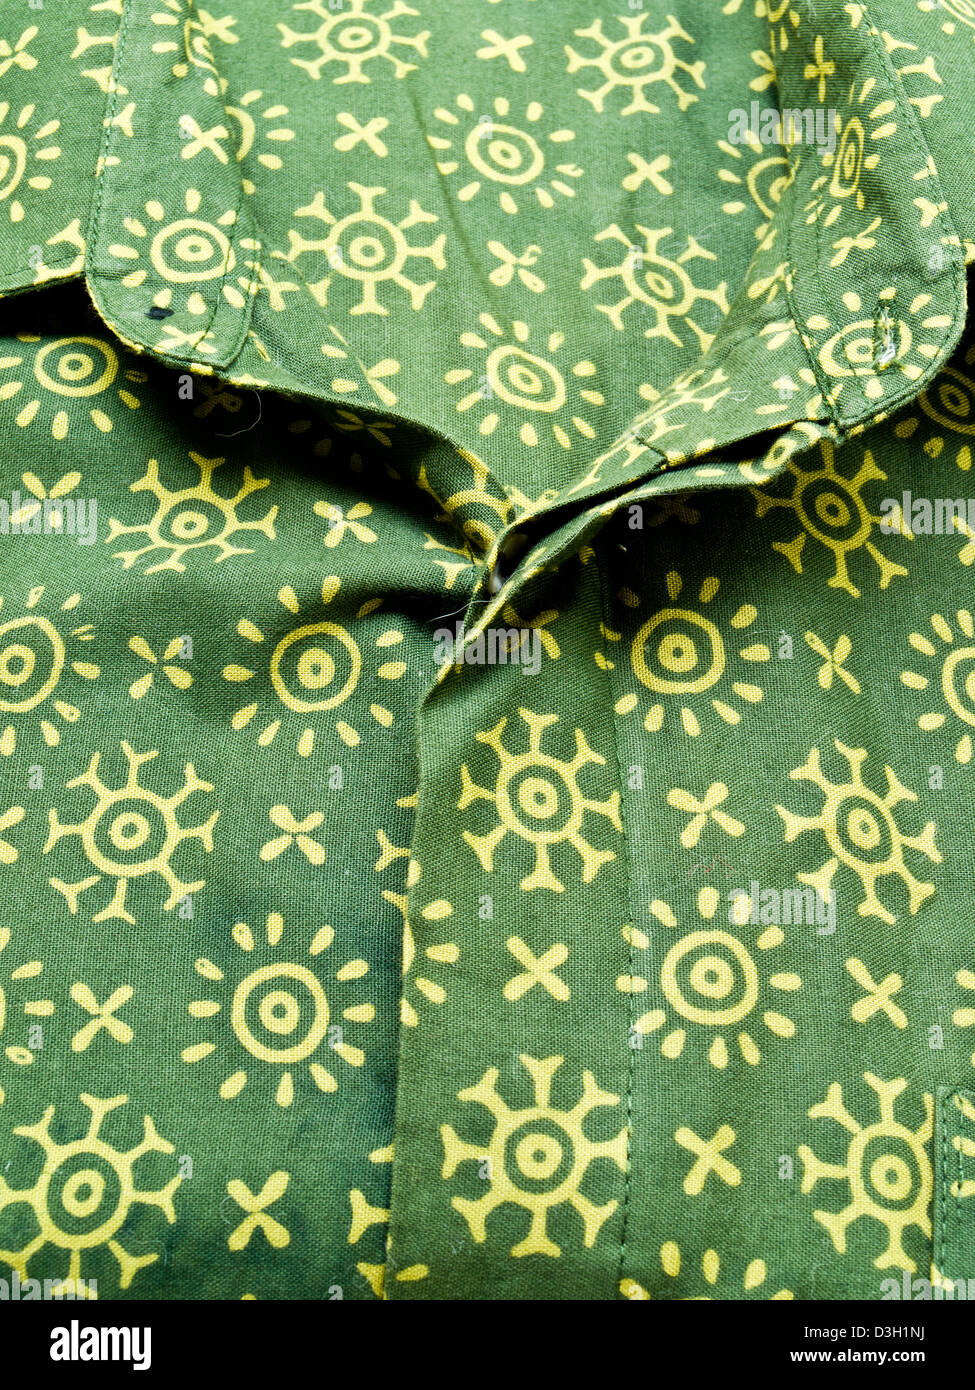 Green batik shirt from Yogyakarta, Indonesia Stock Photo